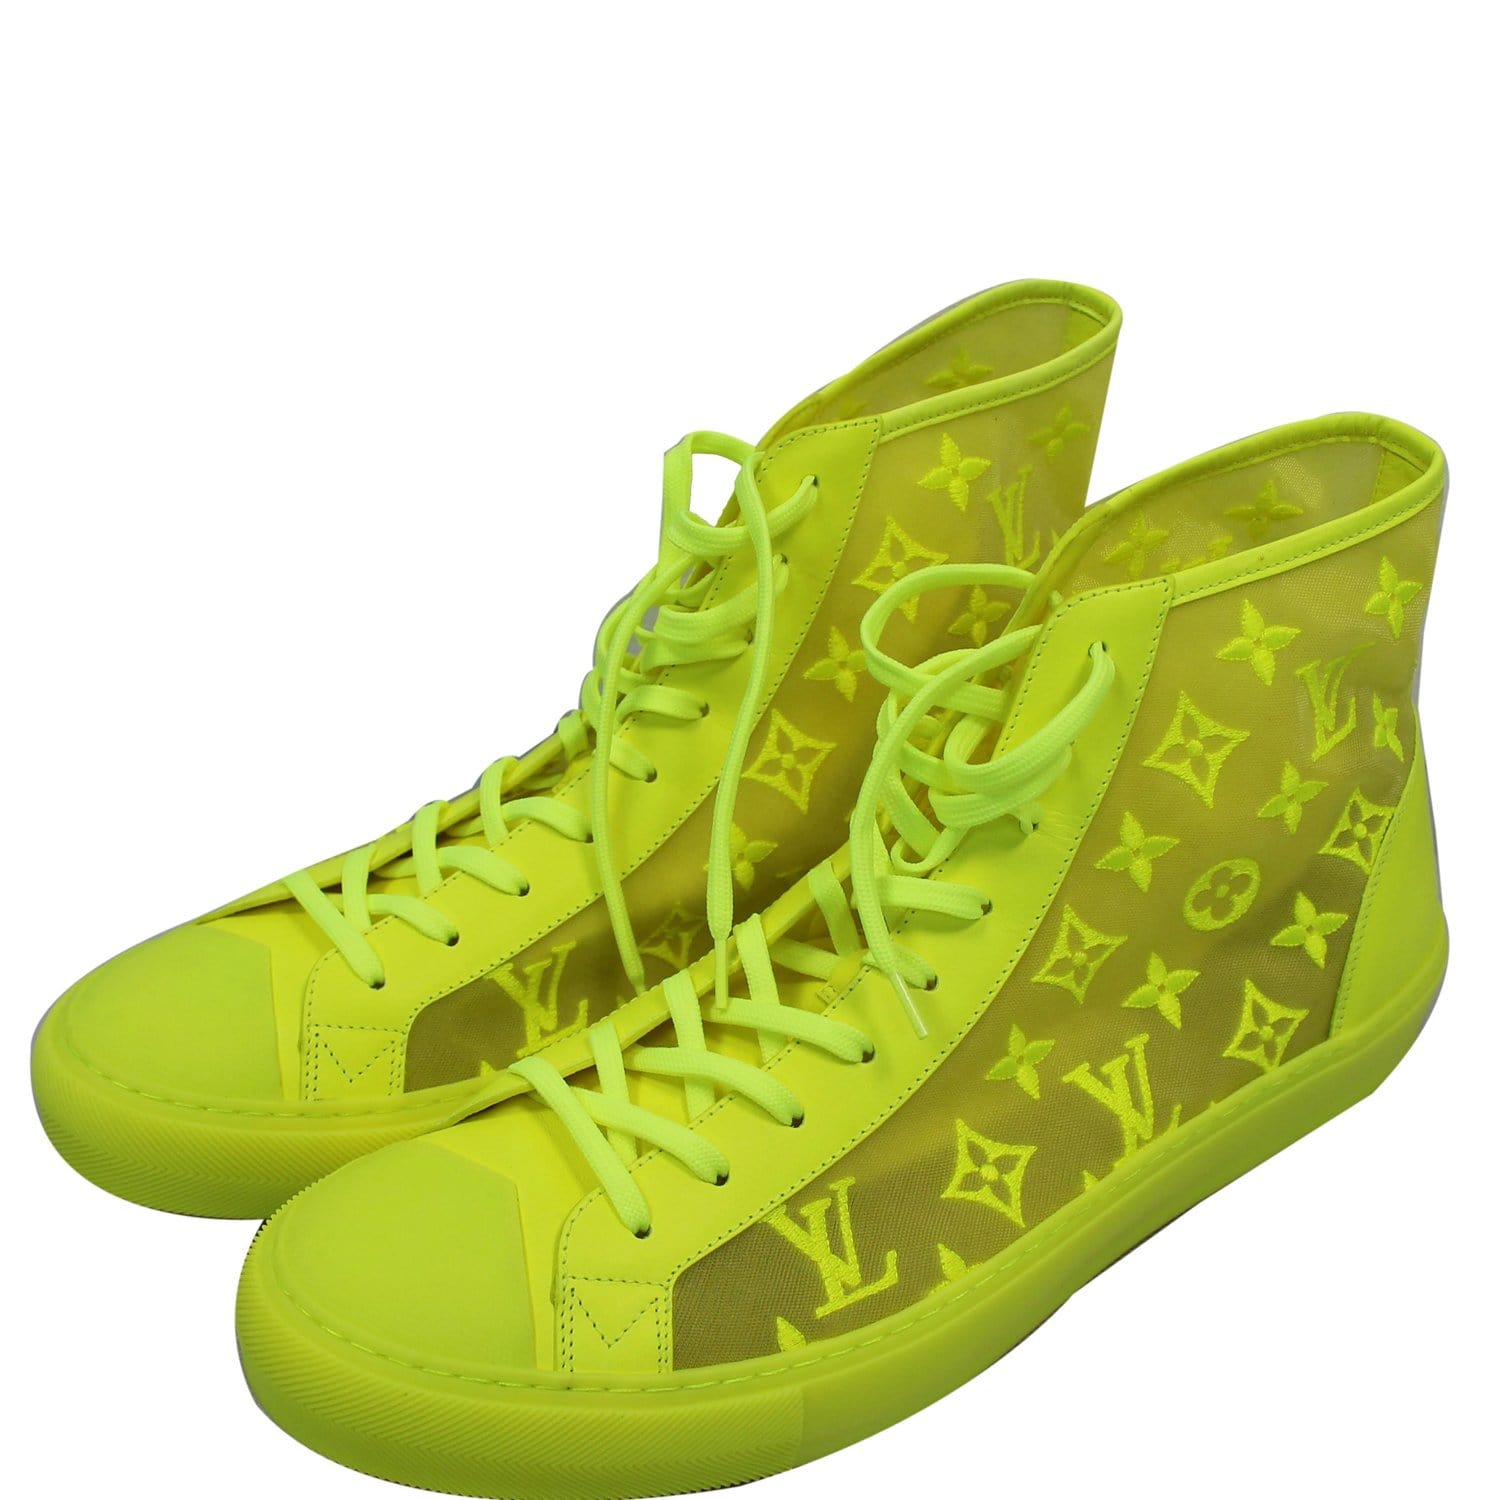 Louis Vuitton, Shoes, Louis Vuitton High Top Sneaker